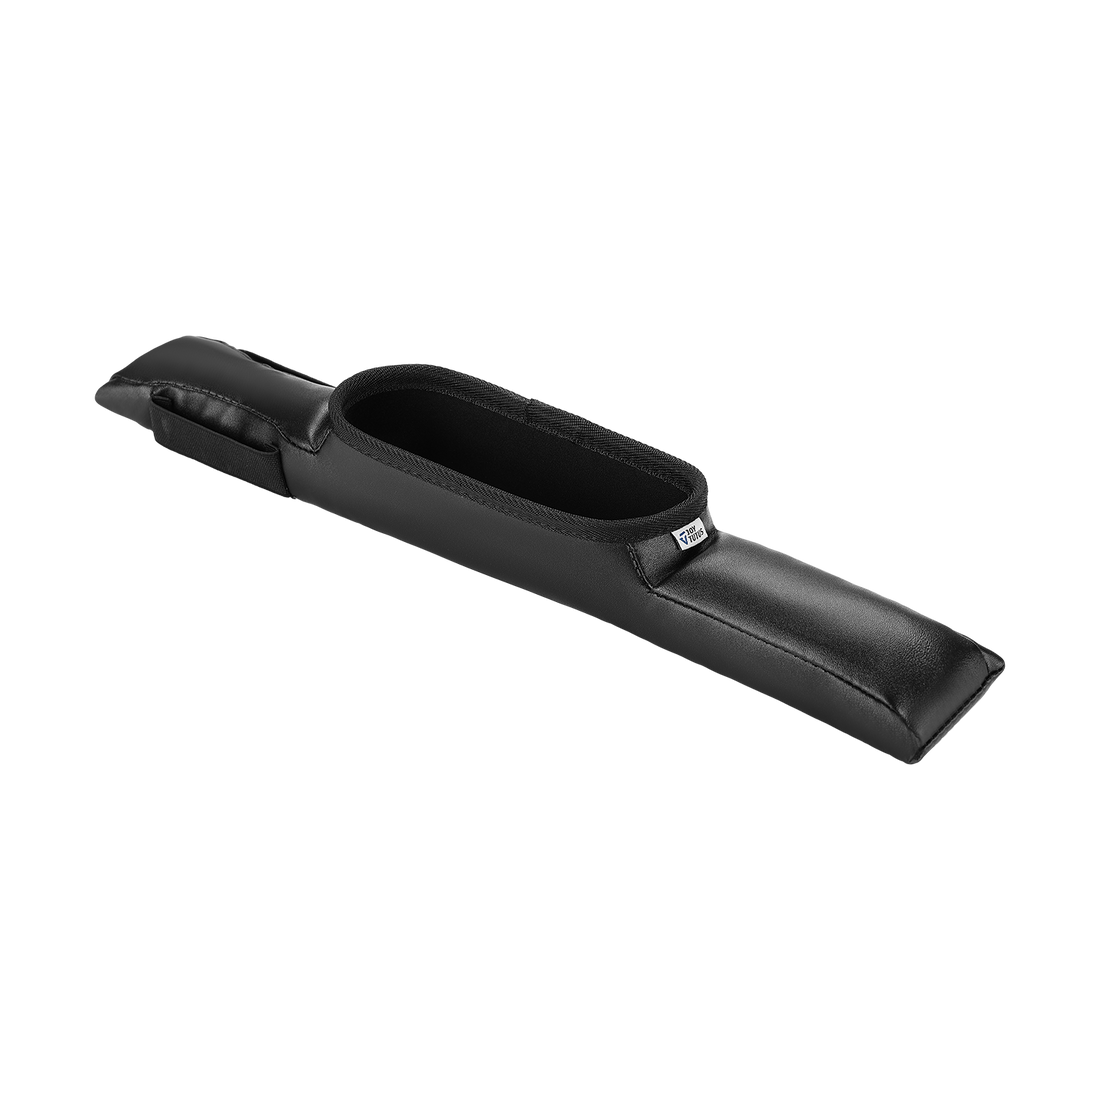 Car Seat Gap Filler Organizer Universal for Car SUV Truck PU Leather EVA Box Storage Cellphone Coin Key